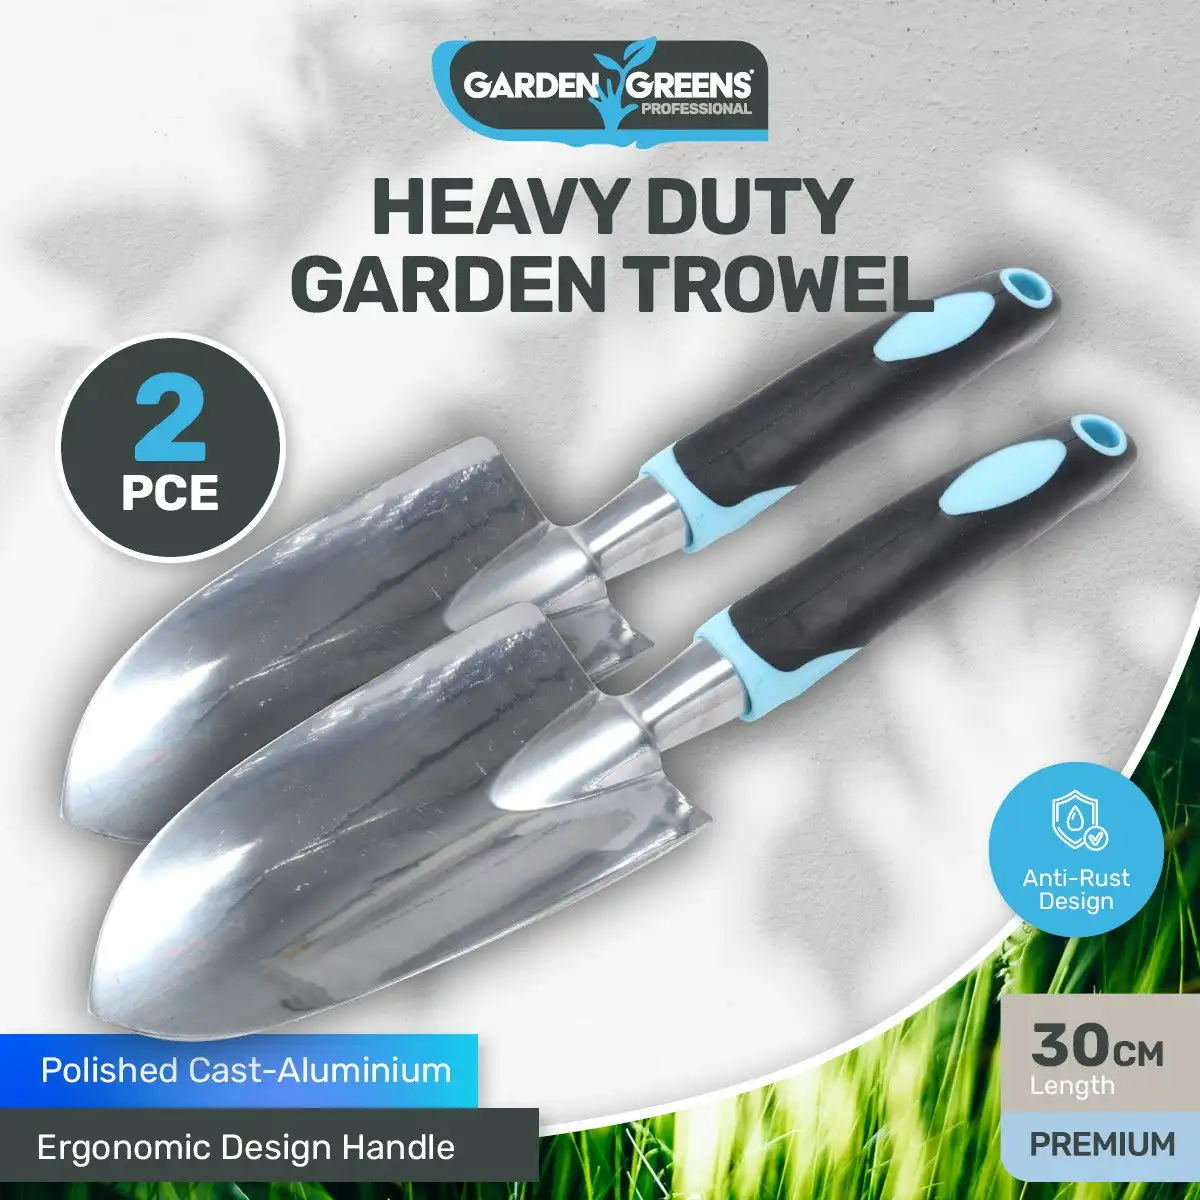 Garden Greens 2PK Garden Trowel Hand Tools Anti Rust Premium Quality 30cm